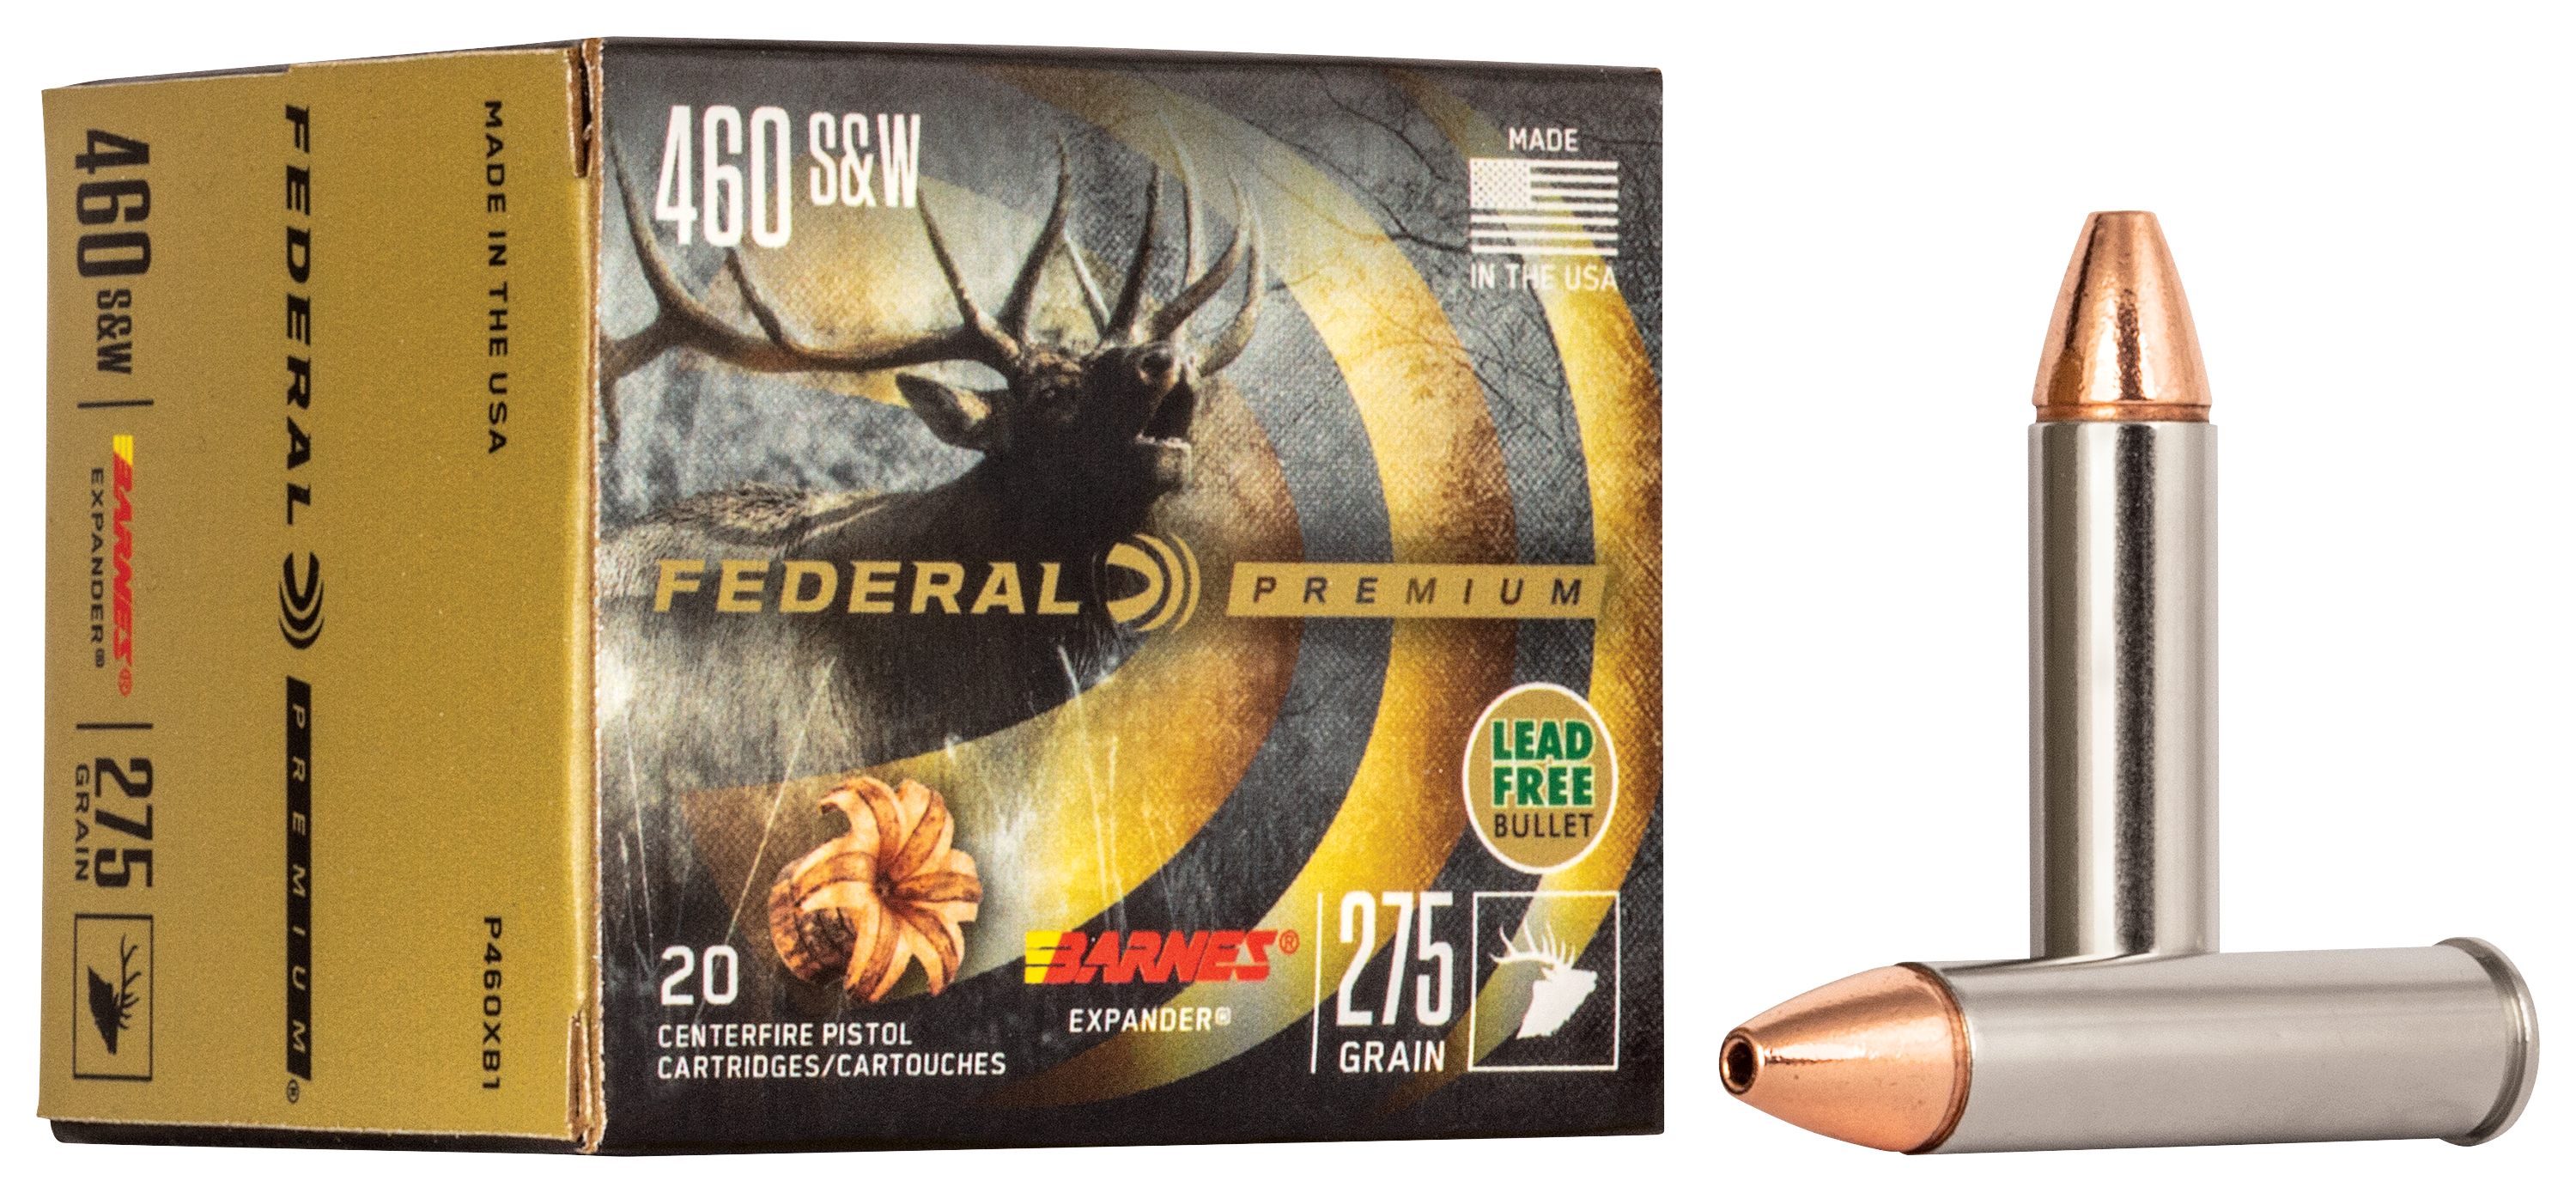 Federal Barnes Expander .460 S&W 275 Grain Centerfire Handgun Ammo